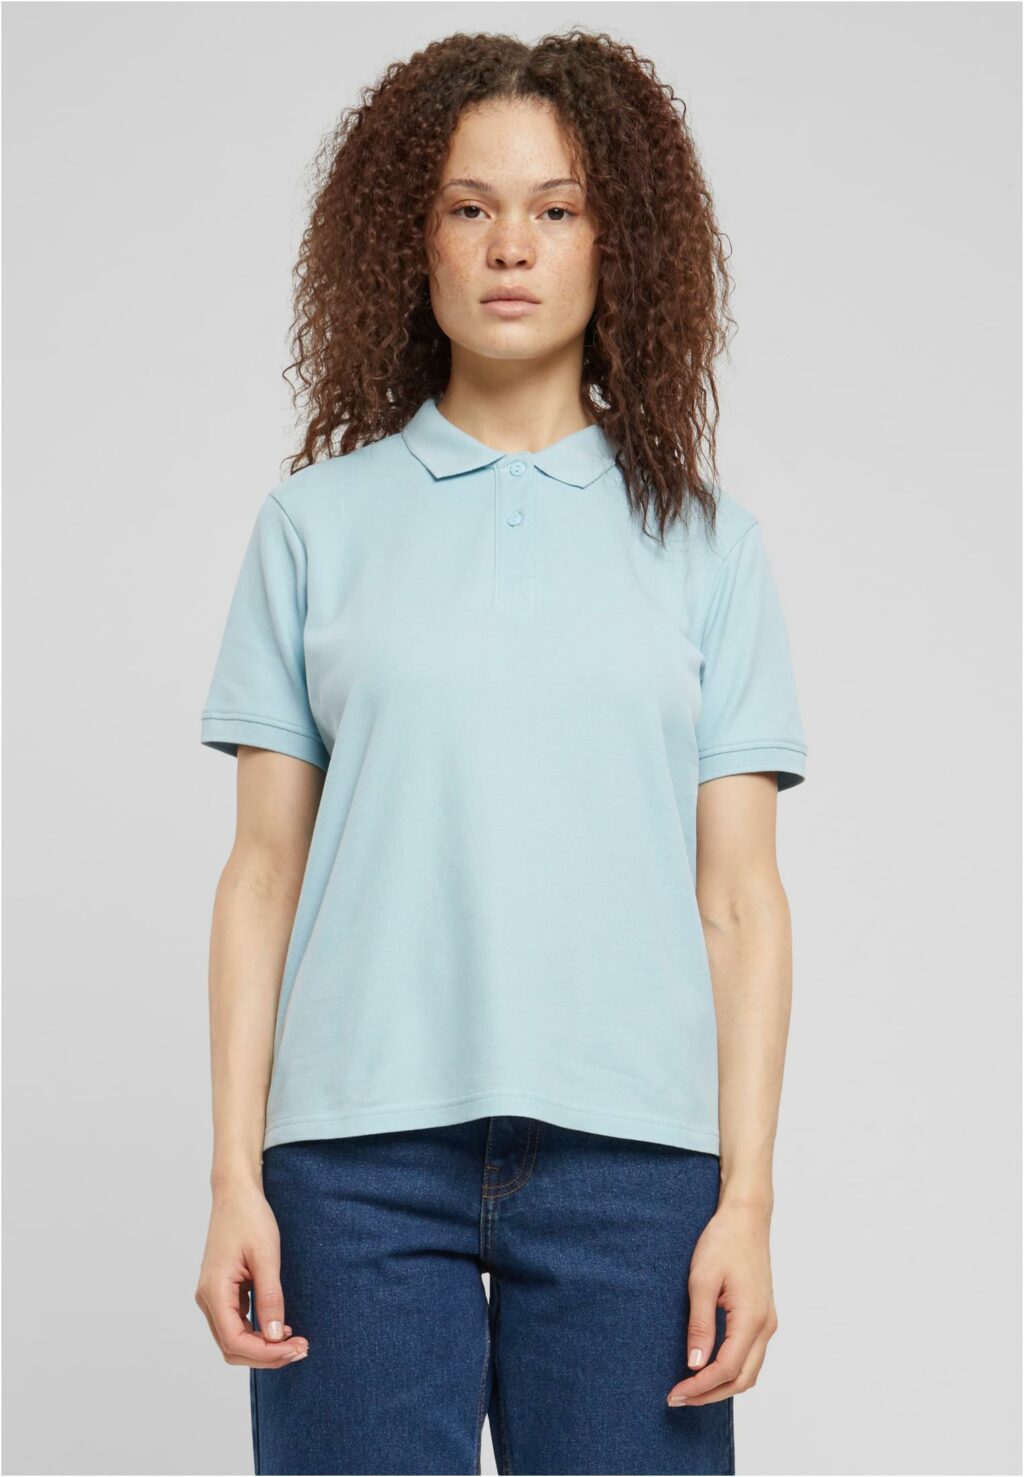 Urban Classics Ladies Polo Shirt oceanblue TB6183